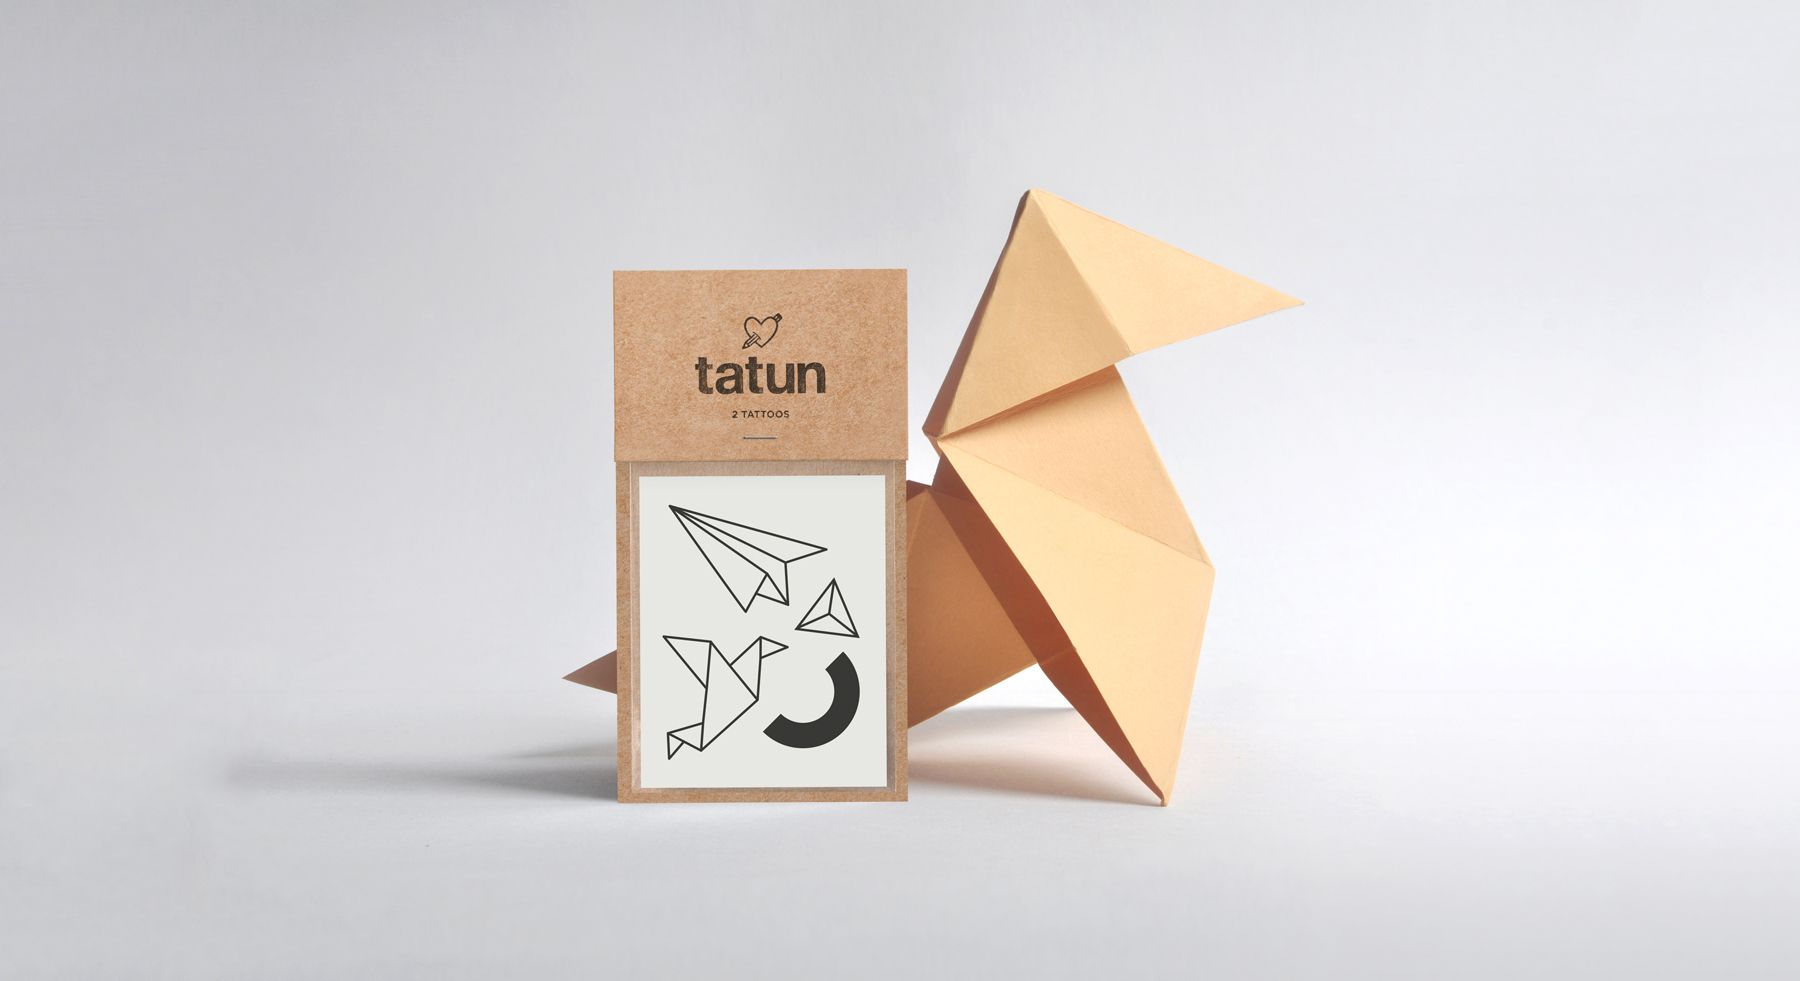 Tatun Lifestyle Tatabi Studio Projects